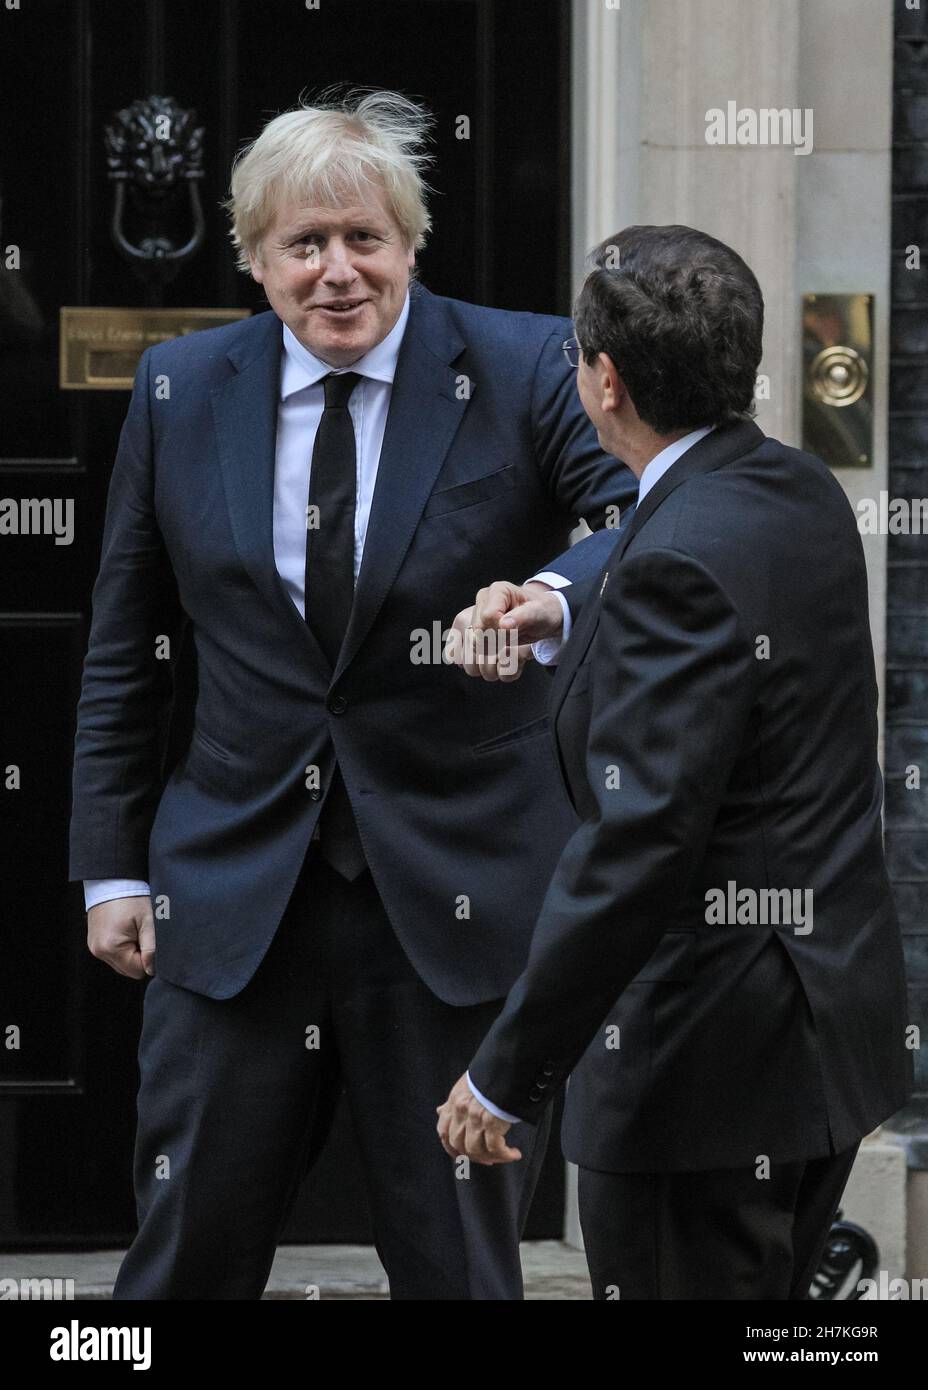 Downing Street, London, UK. 23rd Nov, 2021. Isaac Herzog, President of Israel, meets British Prime Minister Boris Johnson in Downing Street, London today. Credit: Imageplotter/Alamy Live News Stock Photo